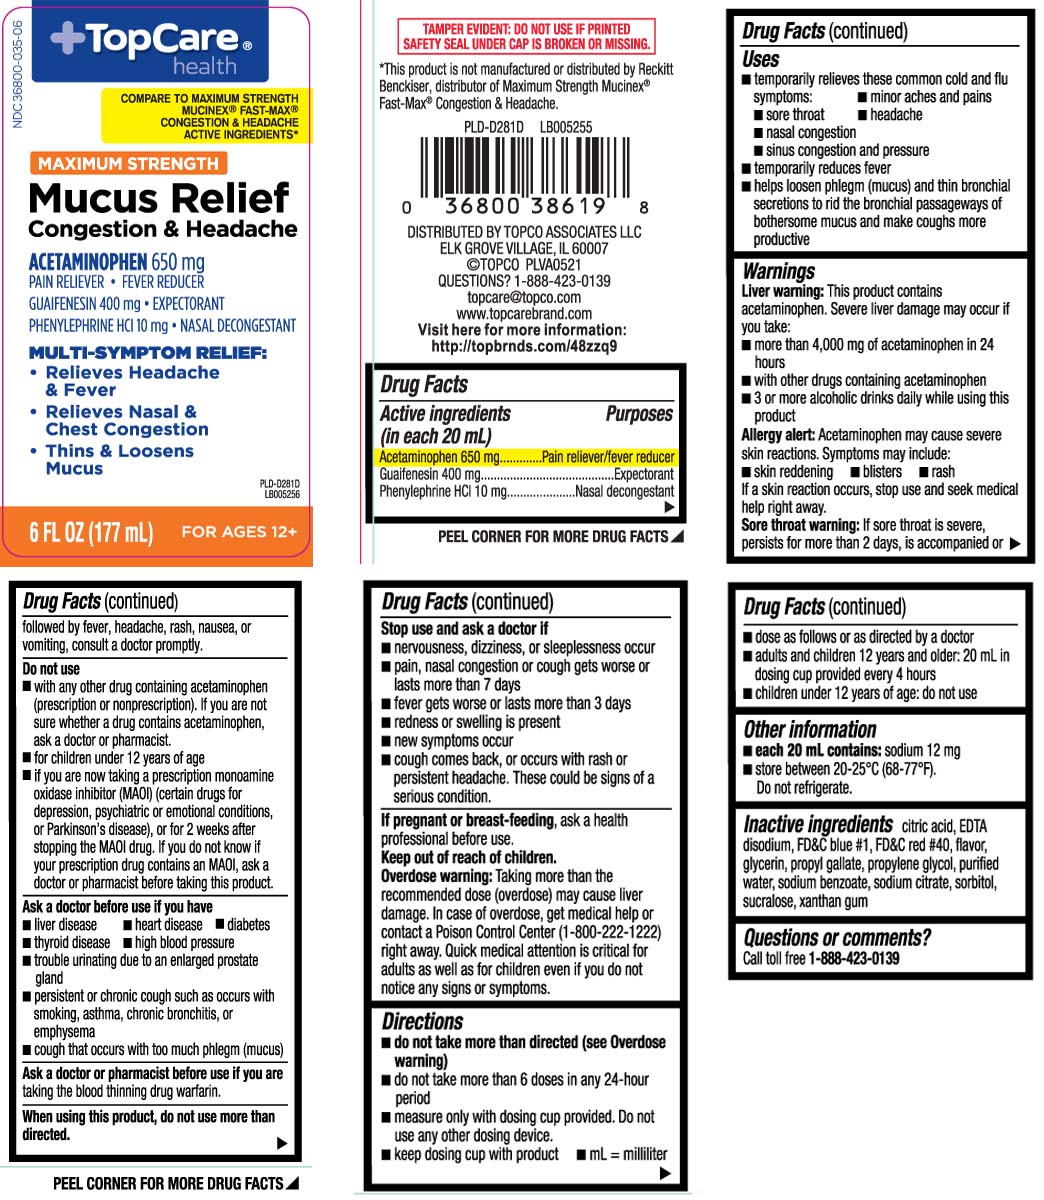 Acetaminophen 650 mg, Guaifenesin 400 mg, Phenylephrine HCl 10 mg